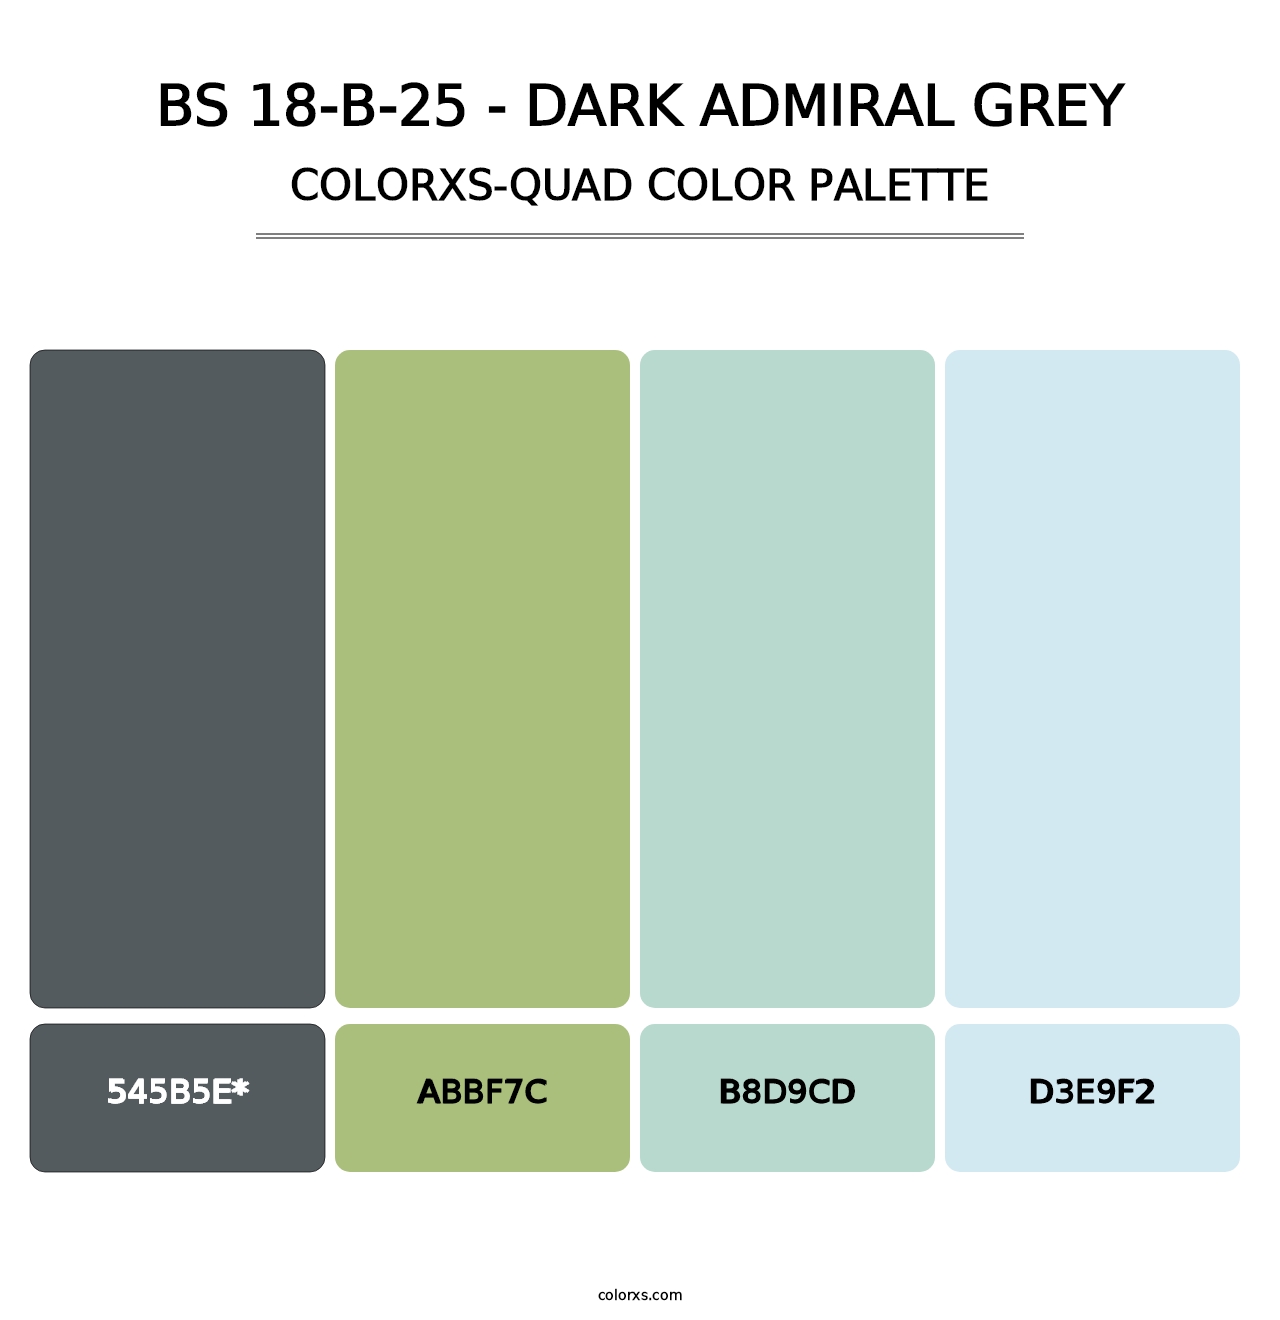 BS 18-B-25 - Dark Admiral Grey - Colorxs Quad Palette